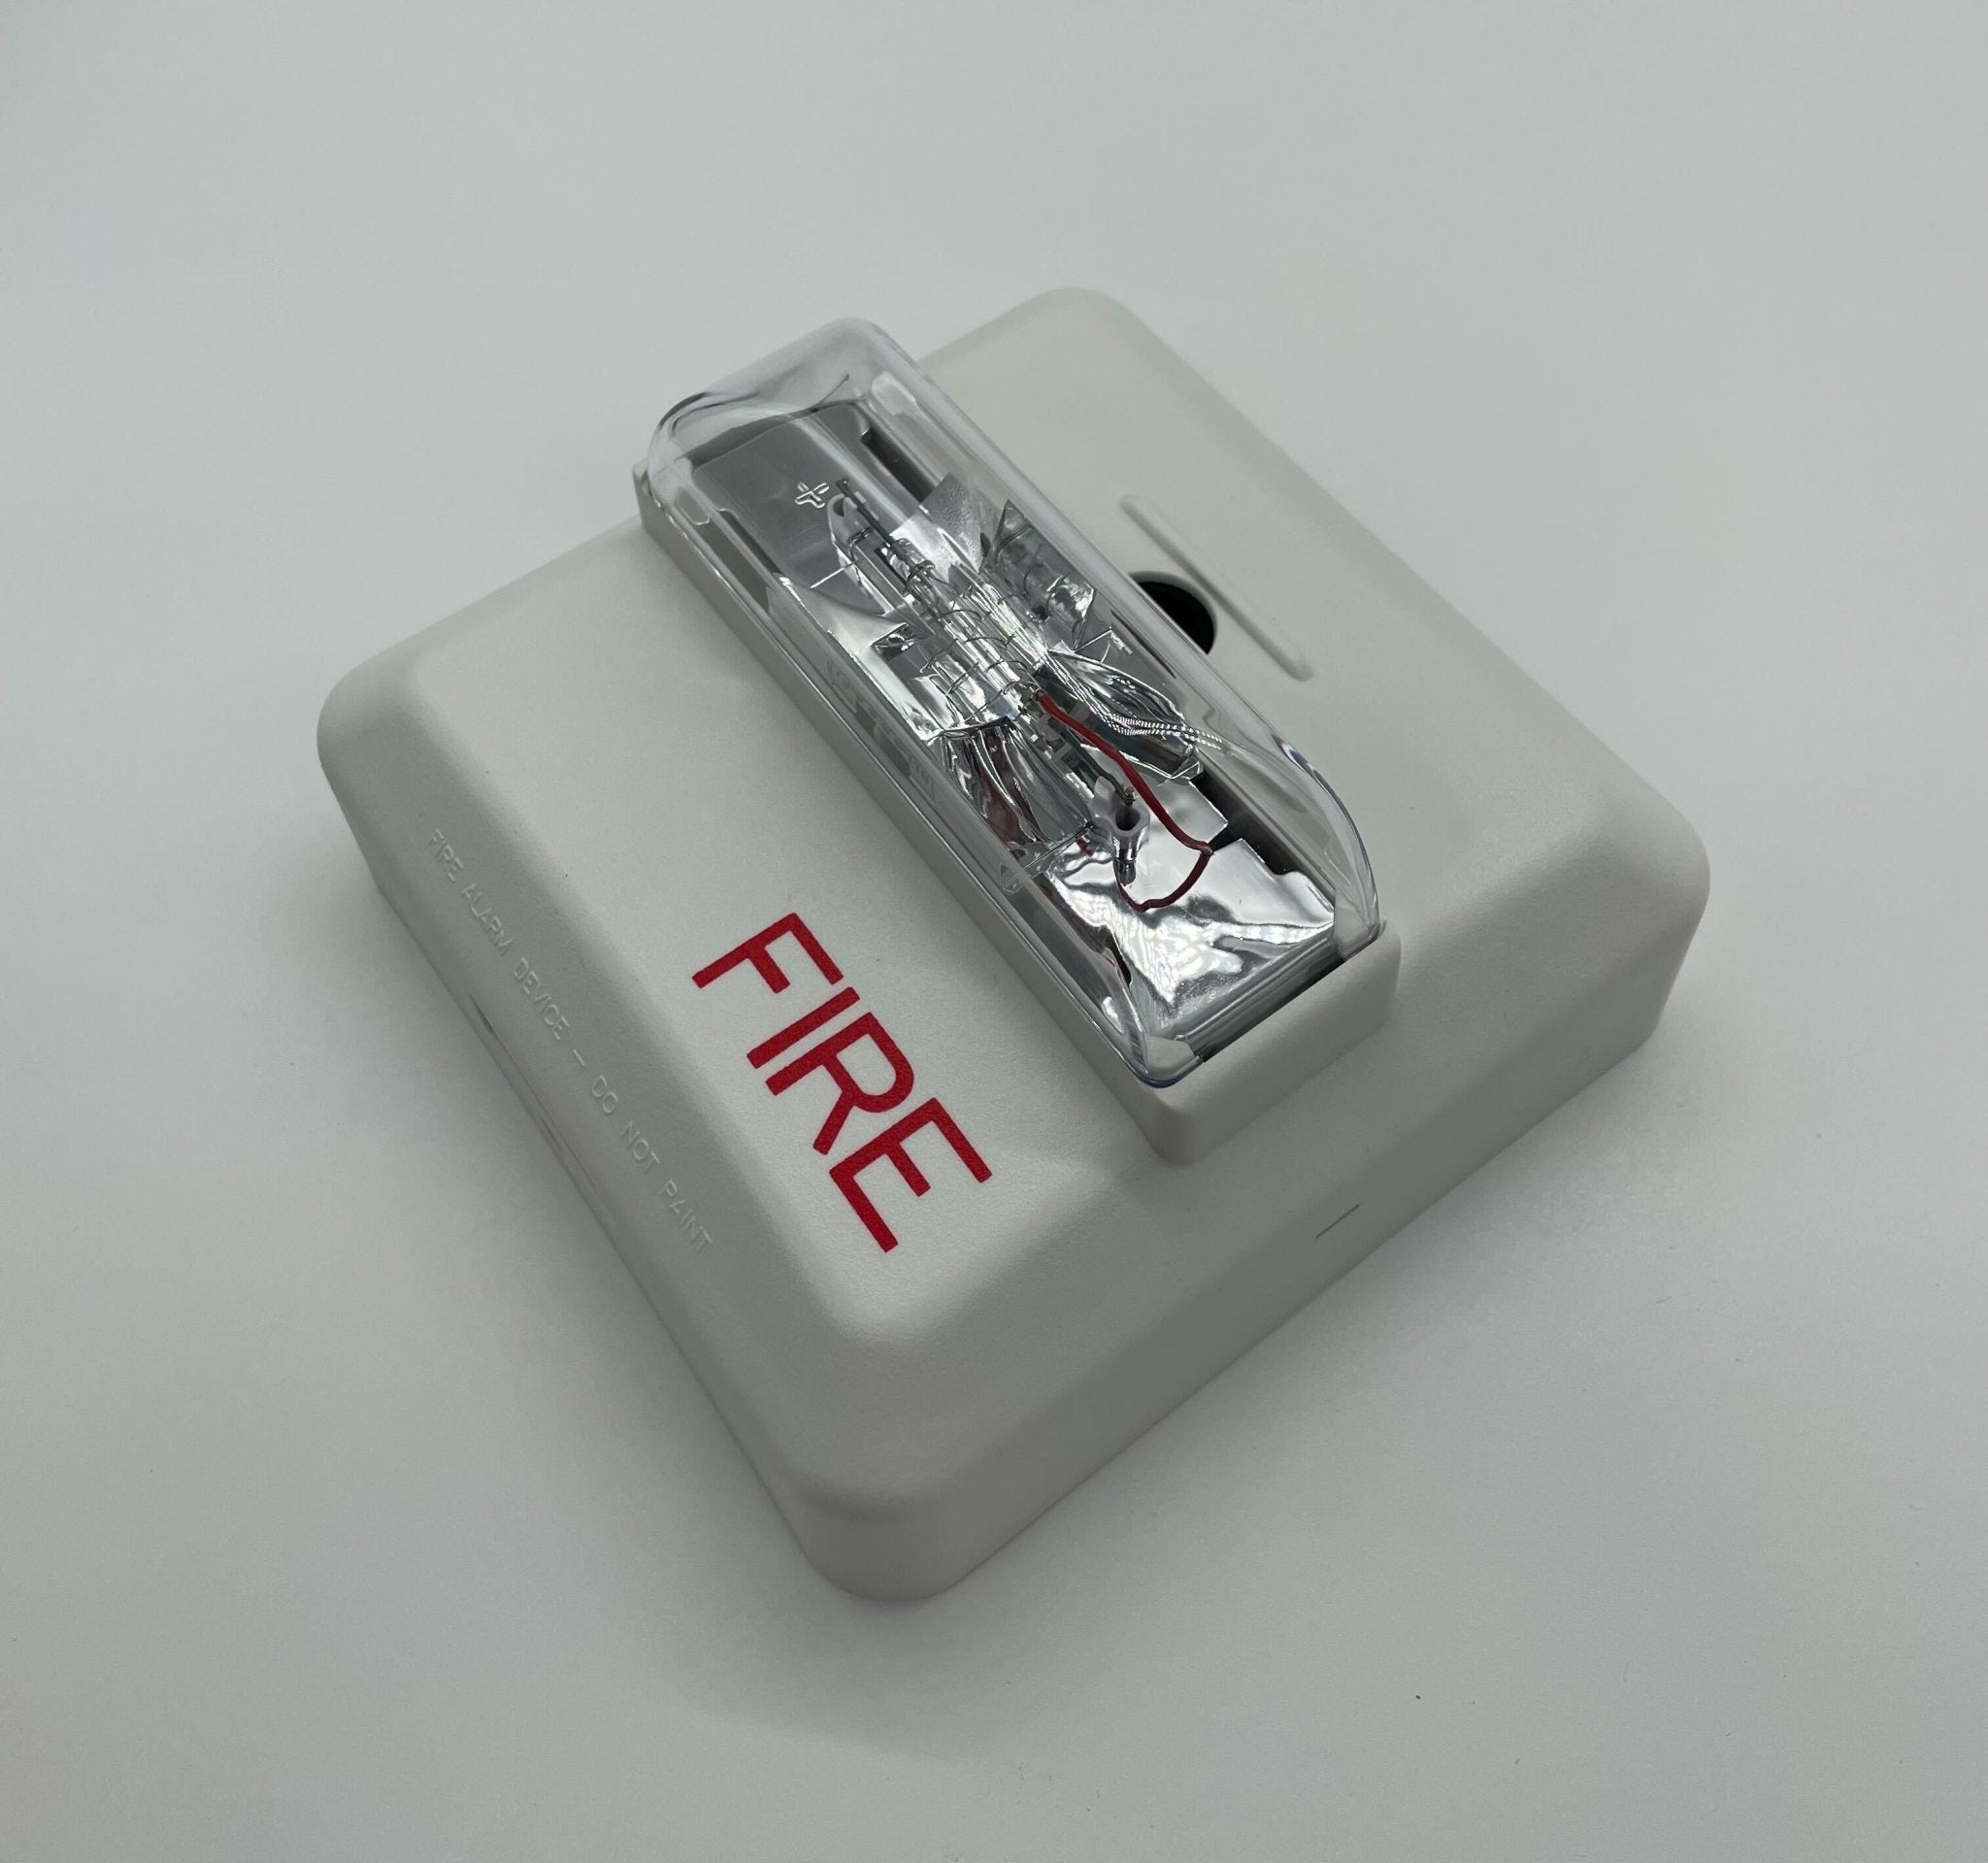 Wheelock ZNS-MCW-FW - The Fire Alarm Supplier